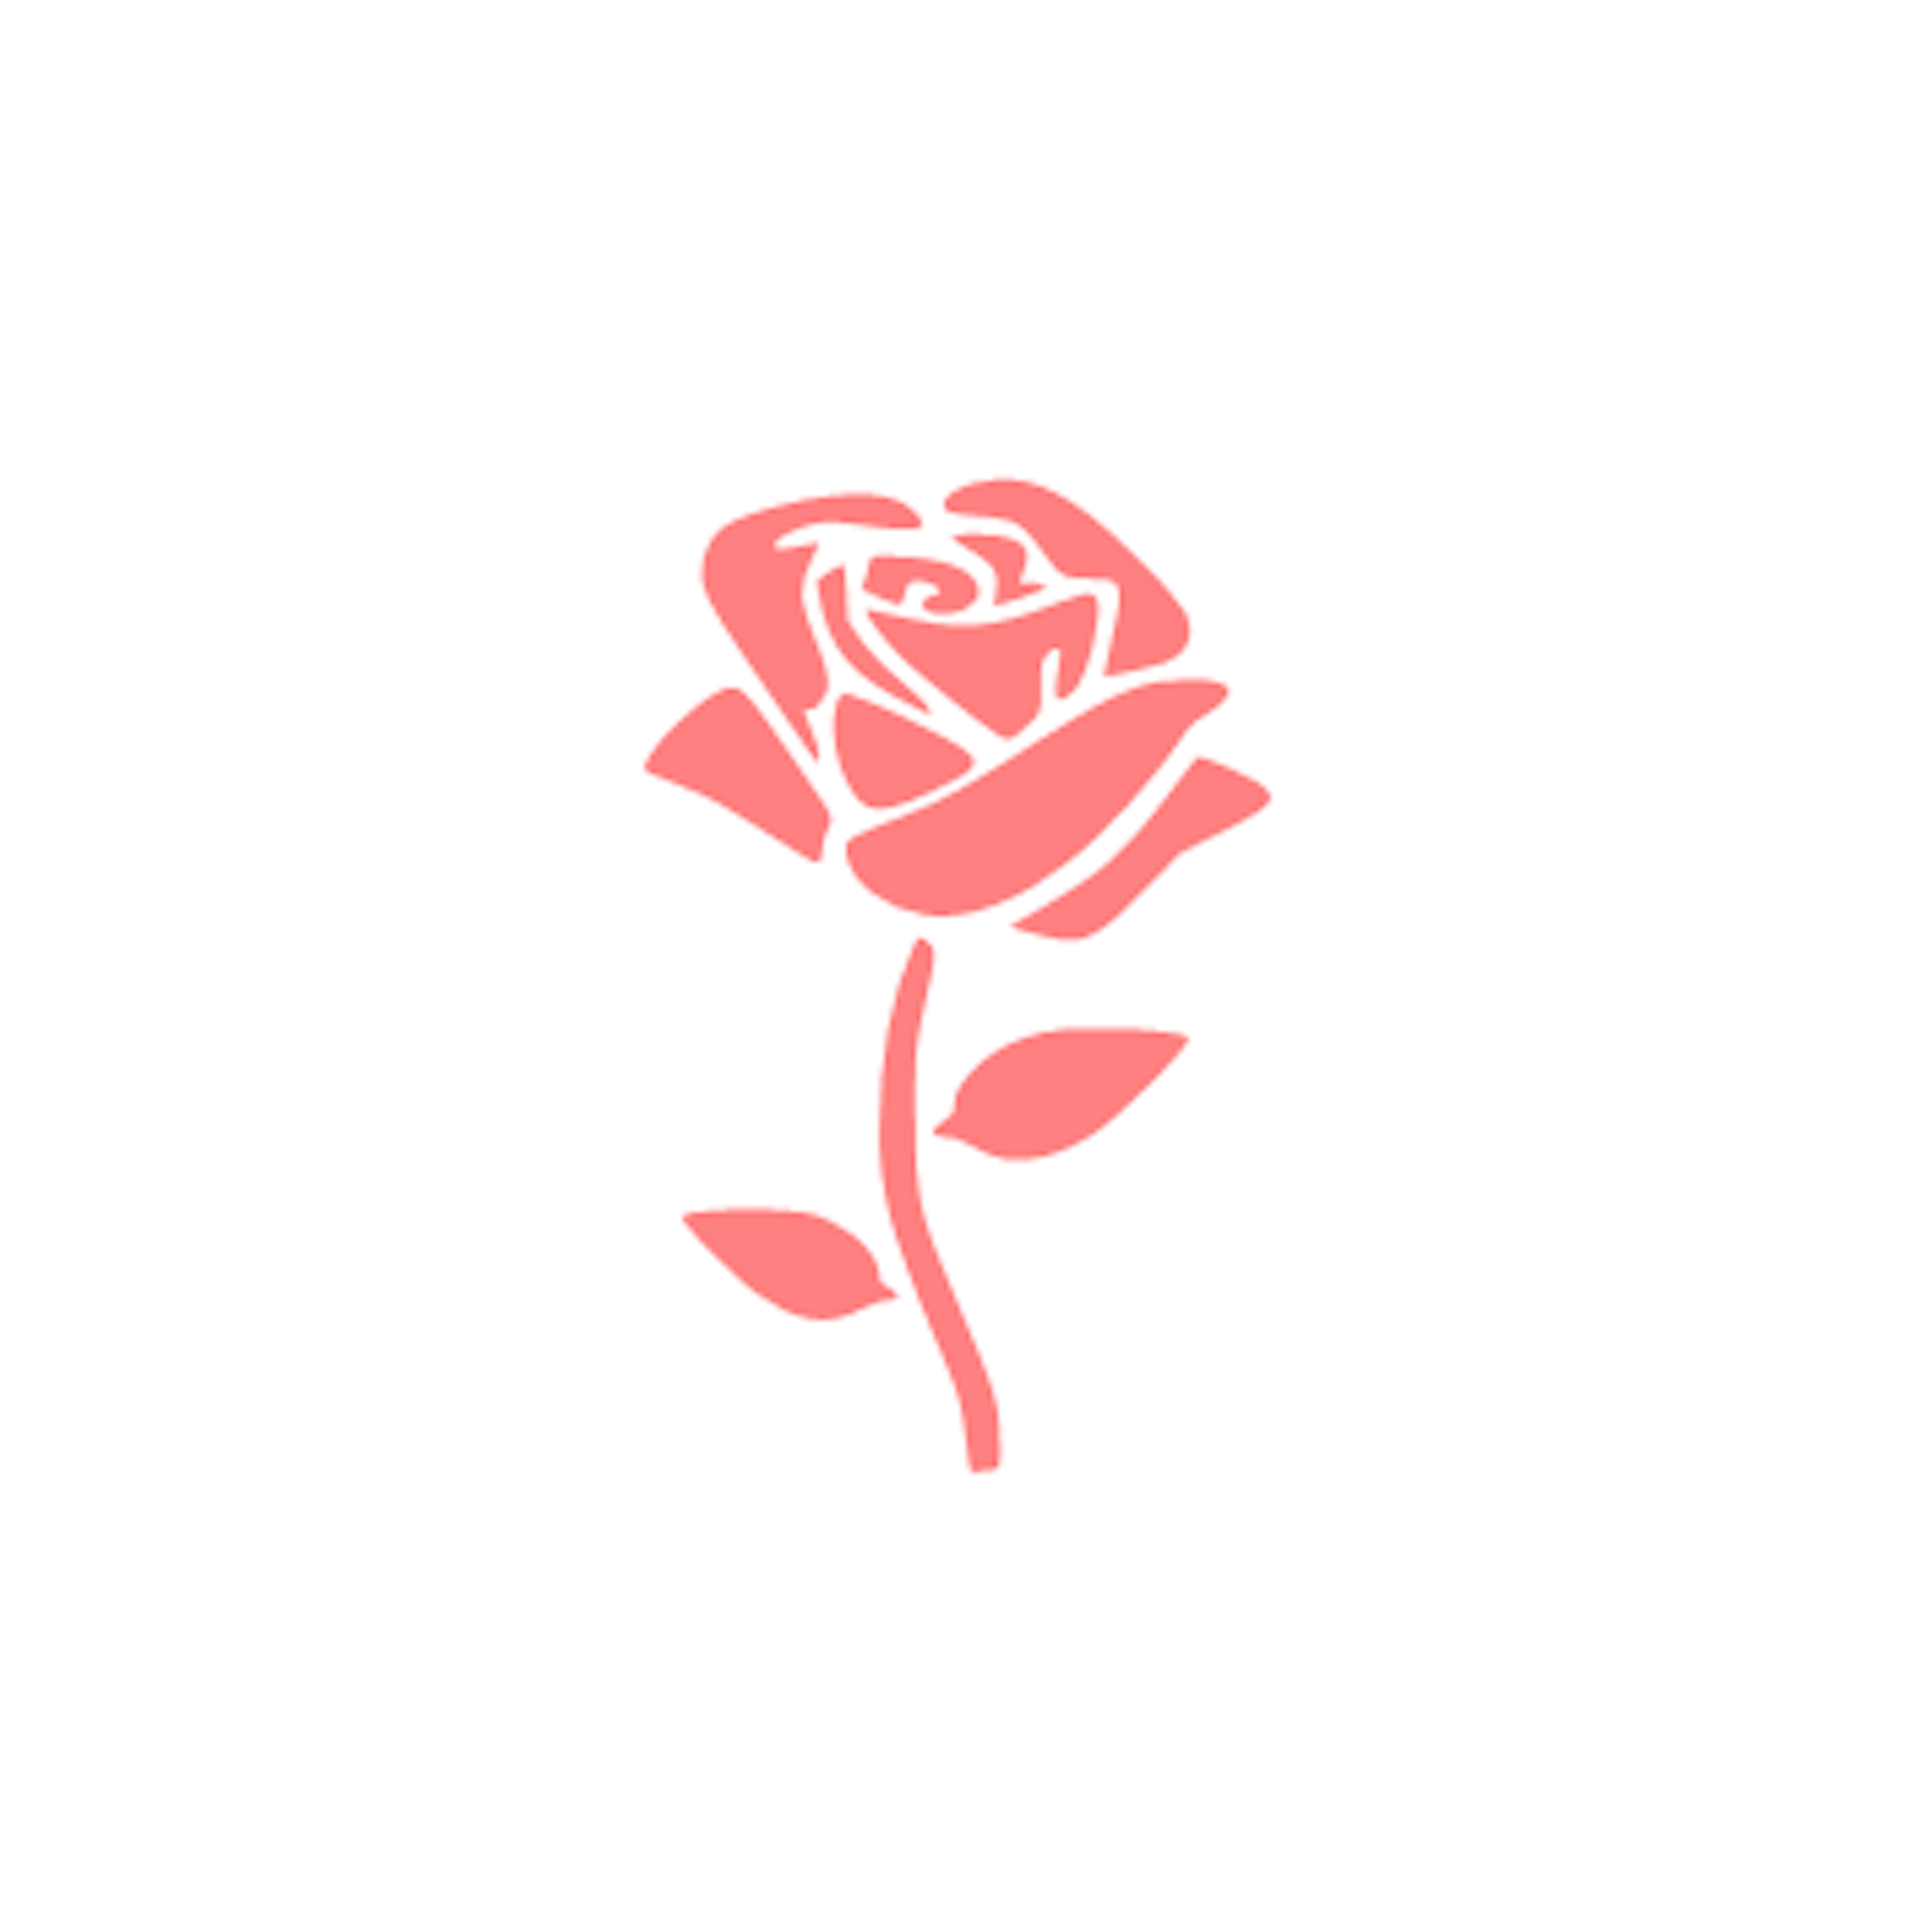 Lancome Rose Logo - Rose on Stem Stencil | Design | Flower logo, Logos, Stencils